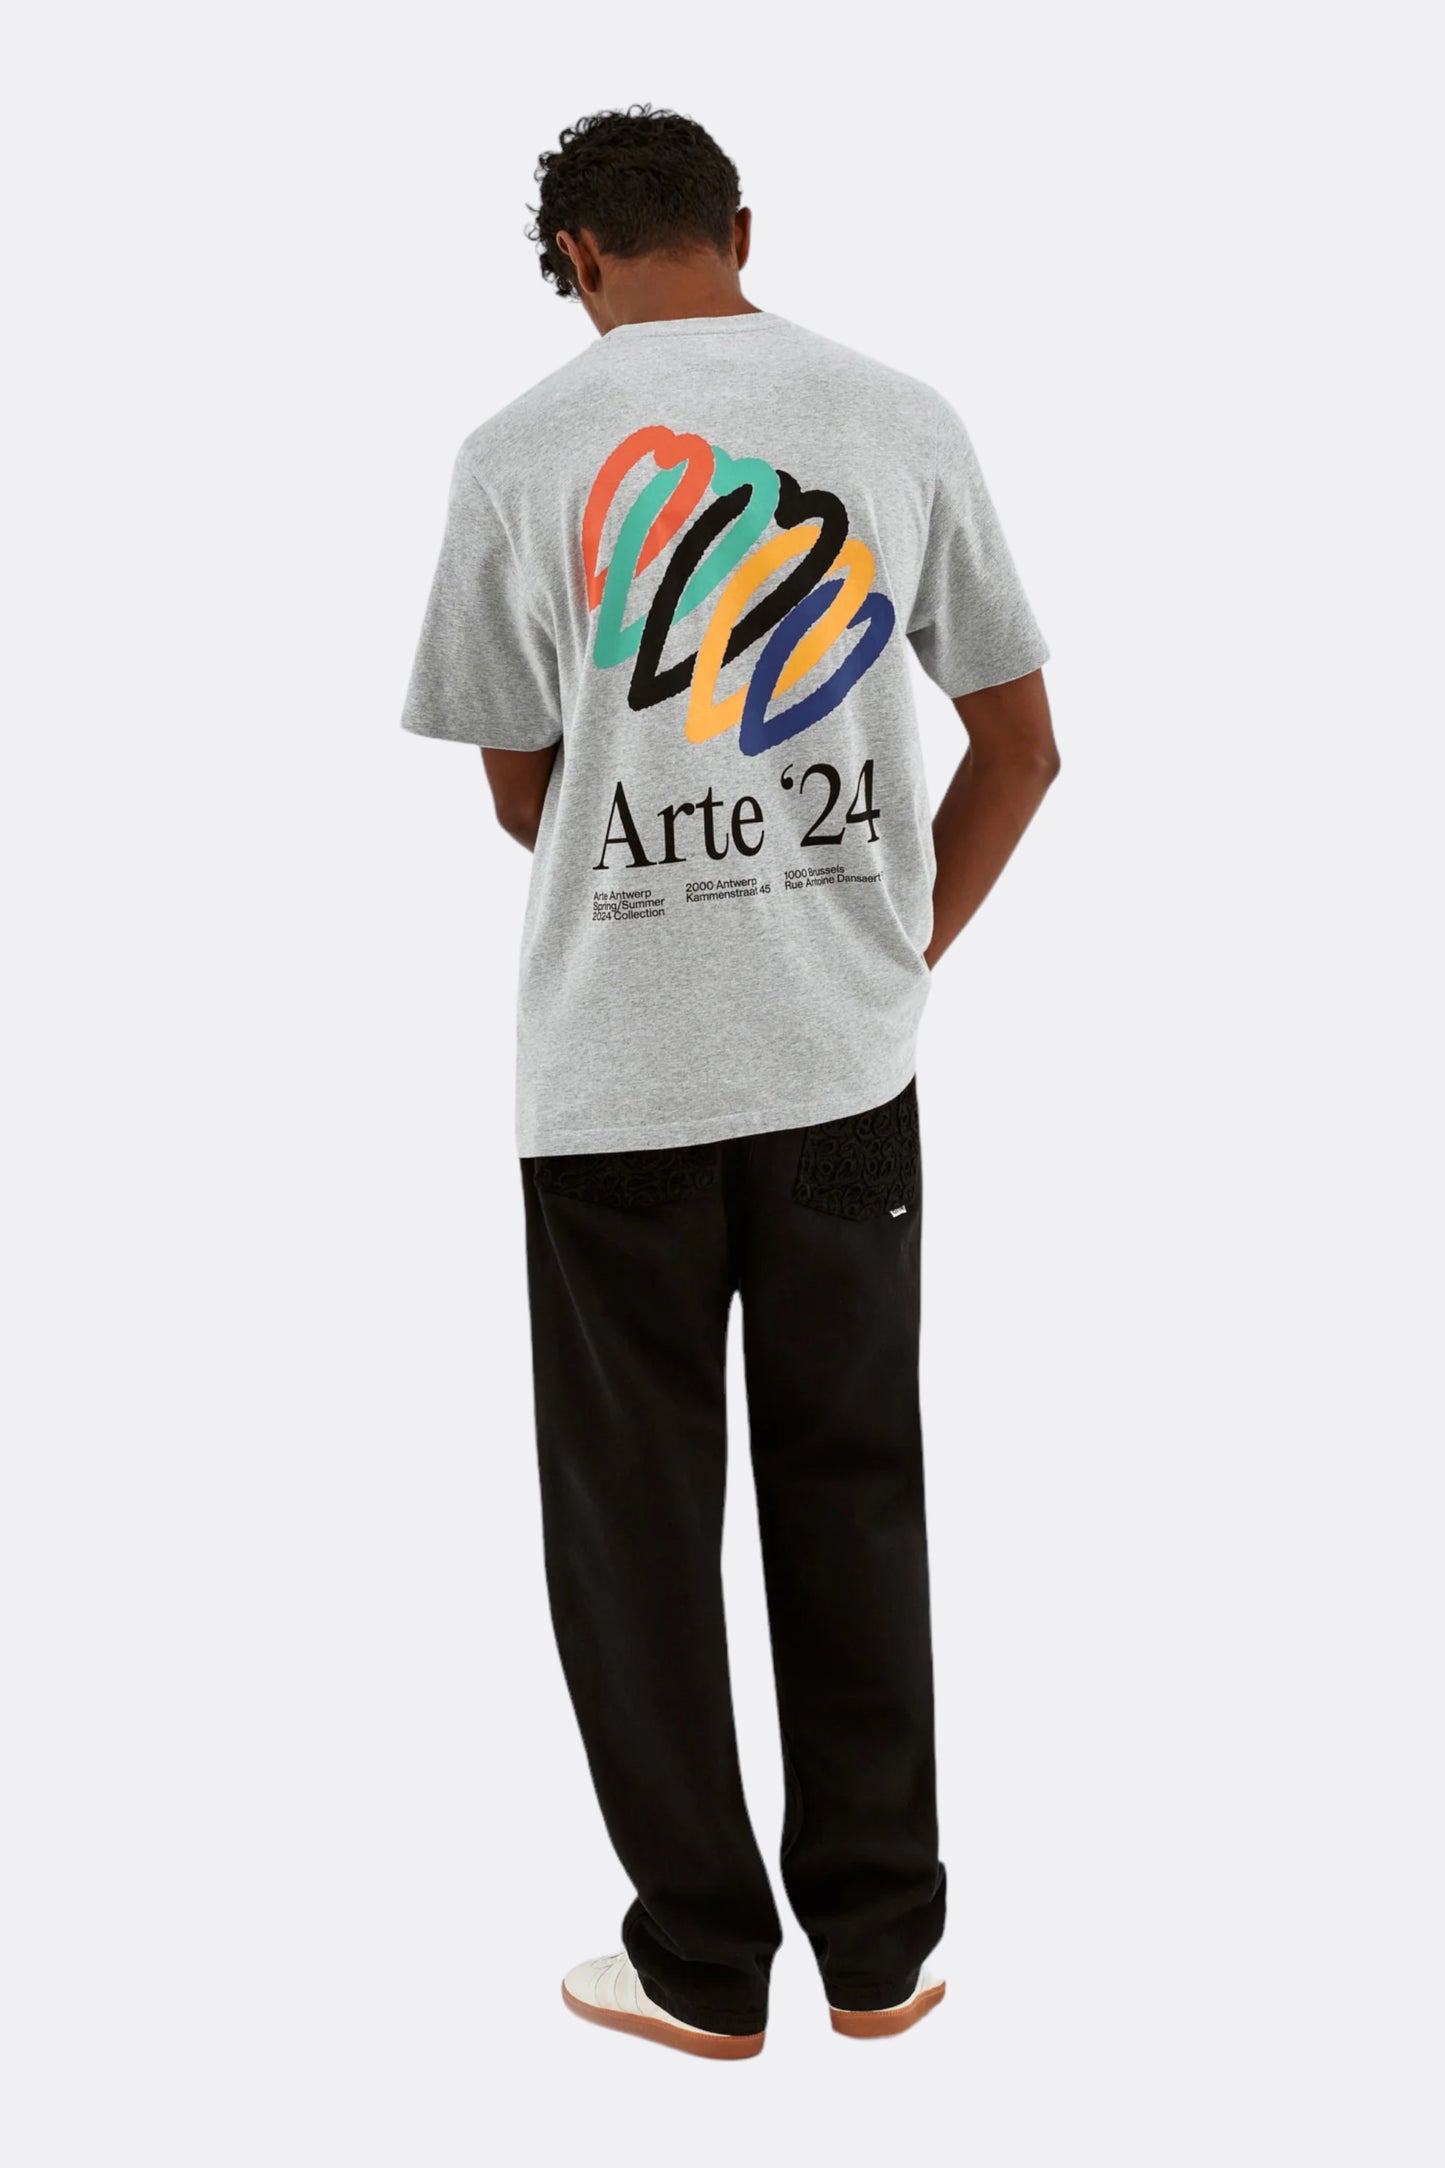 Arte - Teo Back Hearts T-shirt (Grey)